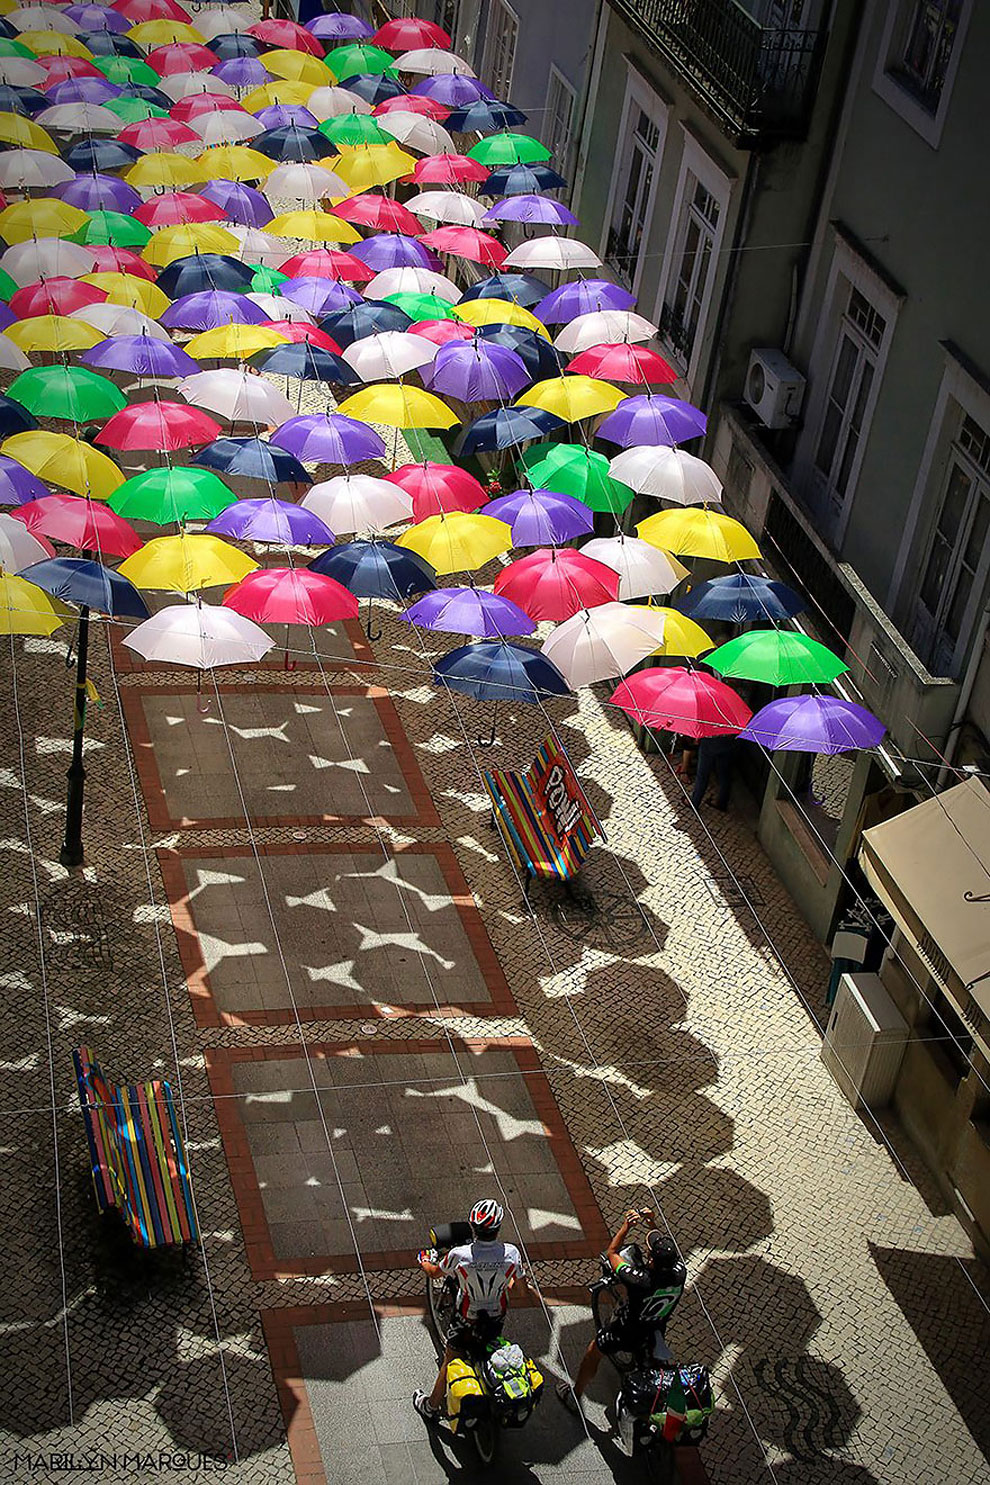 550 Umbrella Sky in Agueda, Portugal